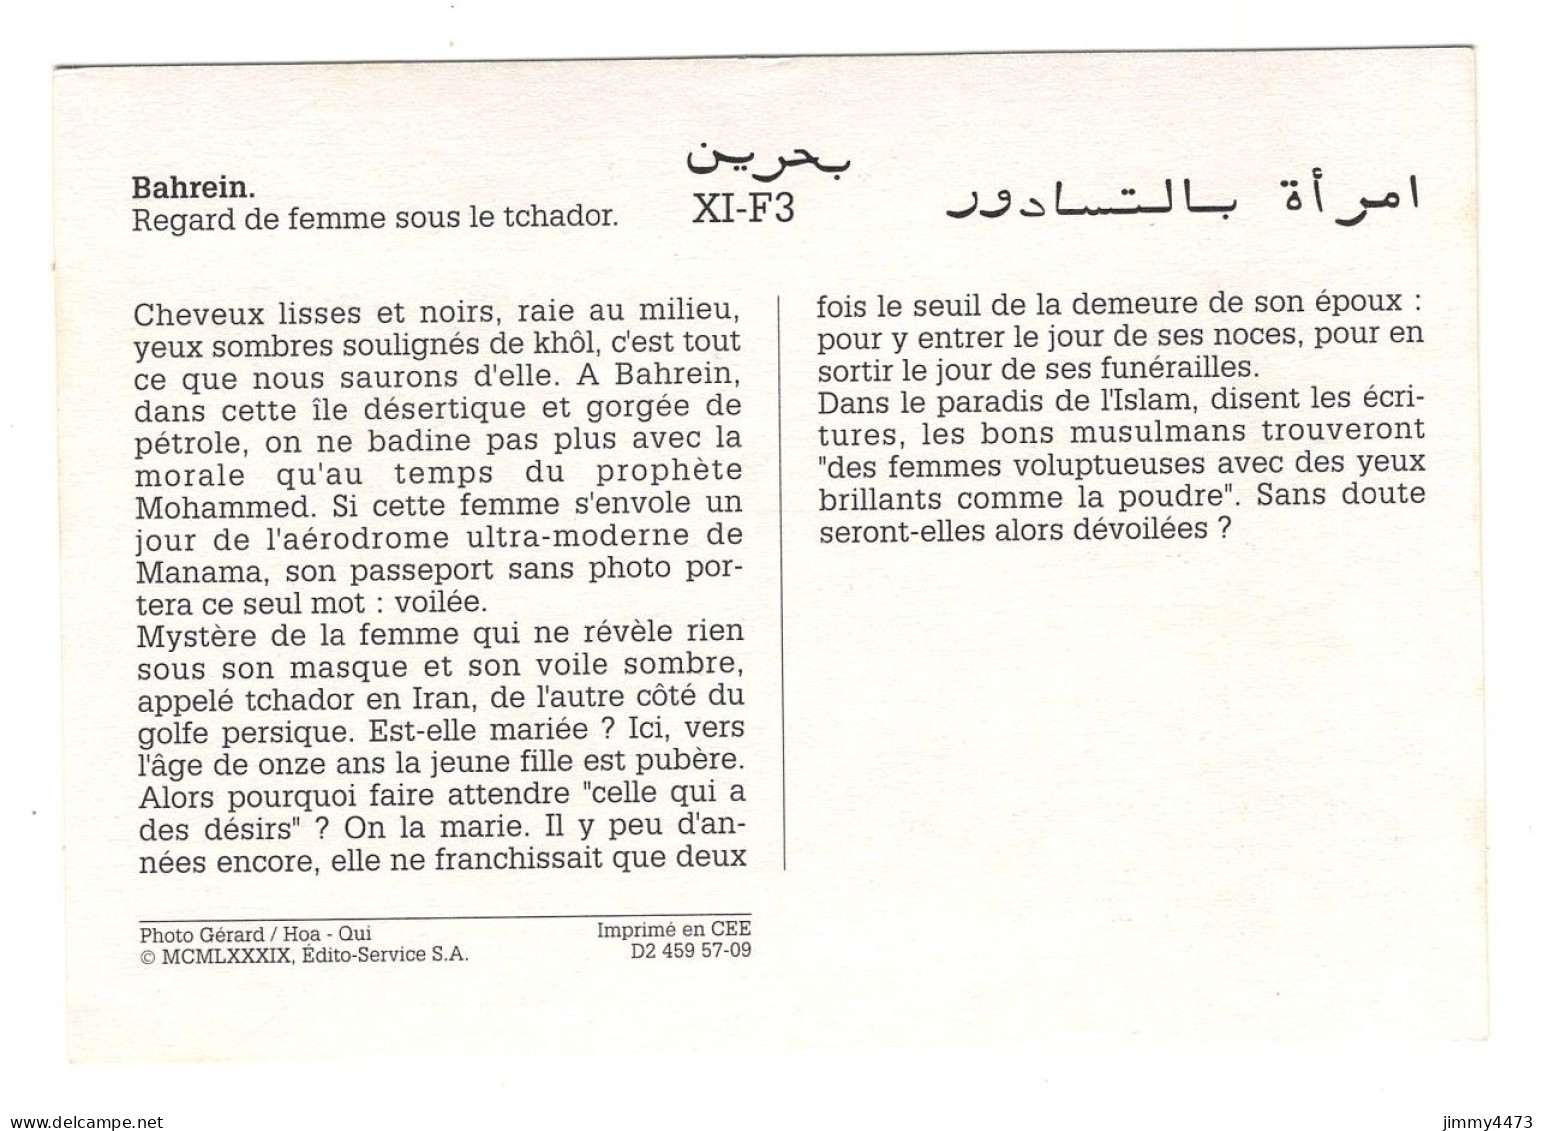 BAHREIN - Regard De Femme Sous Le Tchador ( Texte Au Dos ) XI-F3 - Photo Gérard / Hoa - Qui - Bahreïn